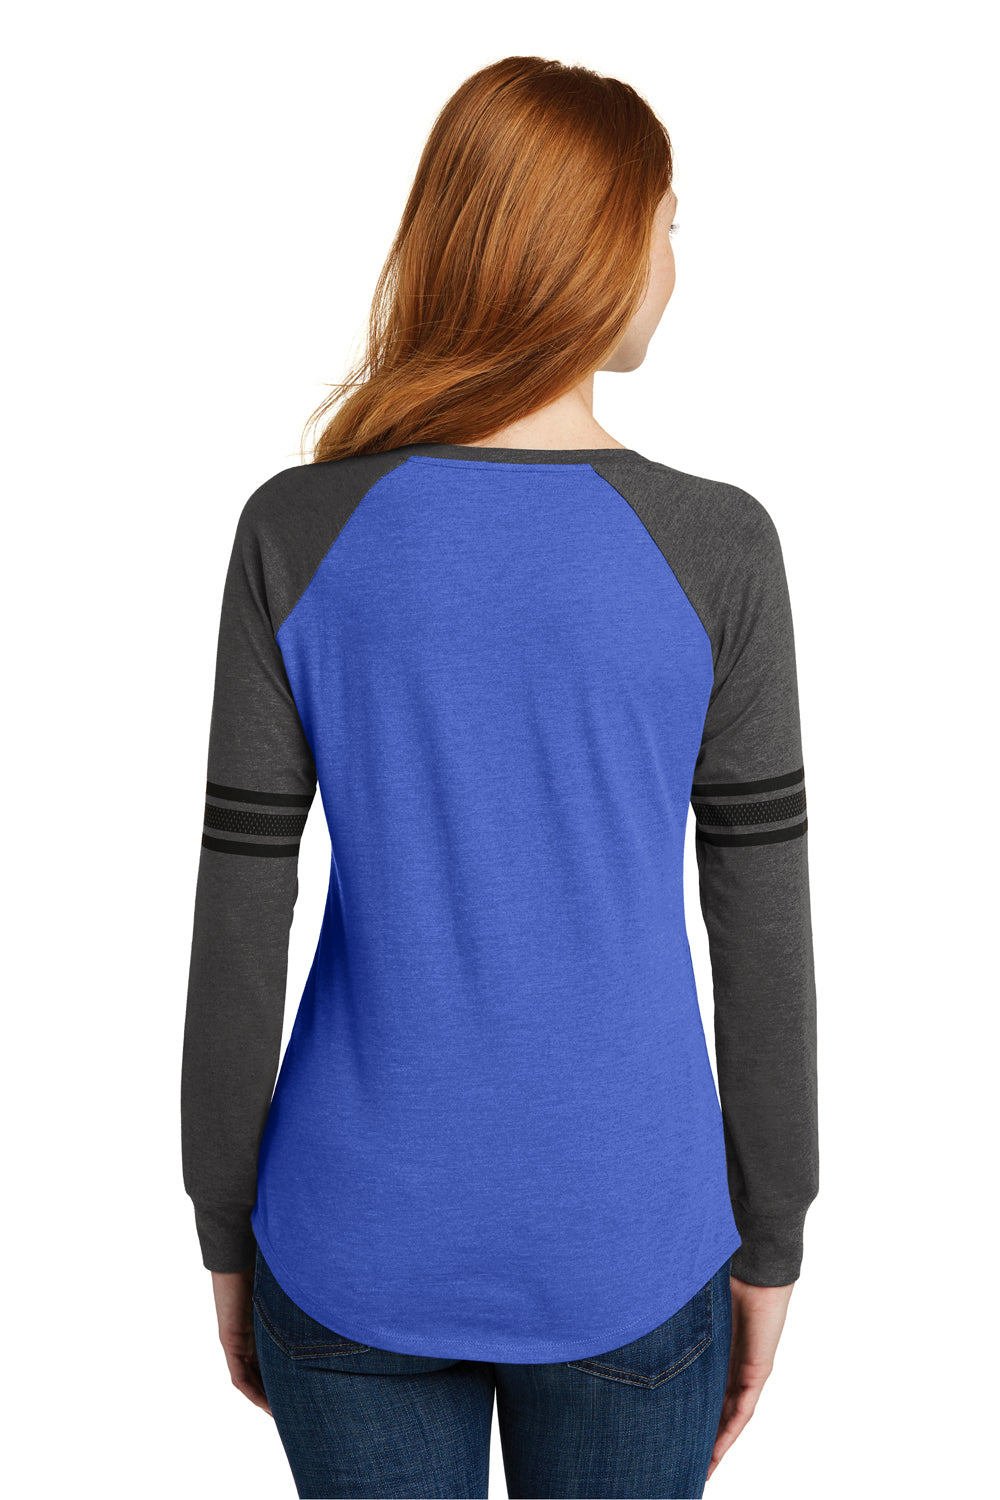 District DM477 Womens Game Long Sleeve V-Neck T-Shirt Heather Royal Blue/Heather Charcoal Grey/Black Back